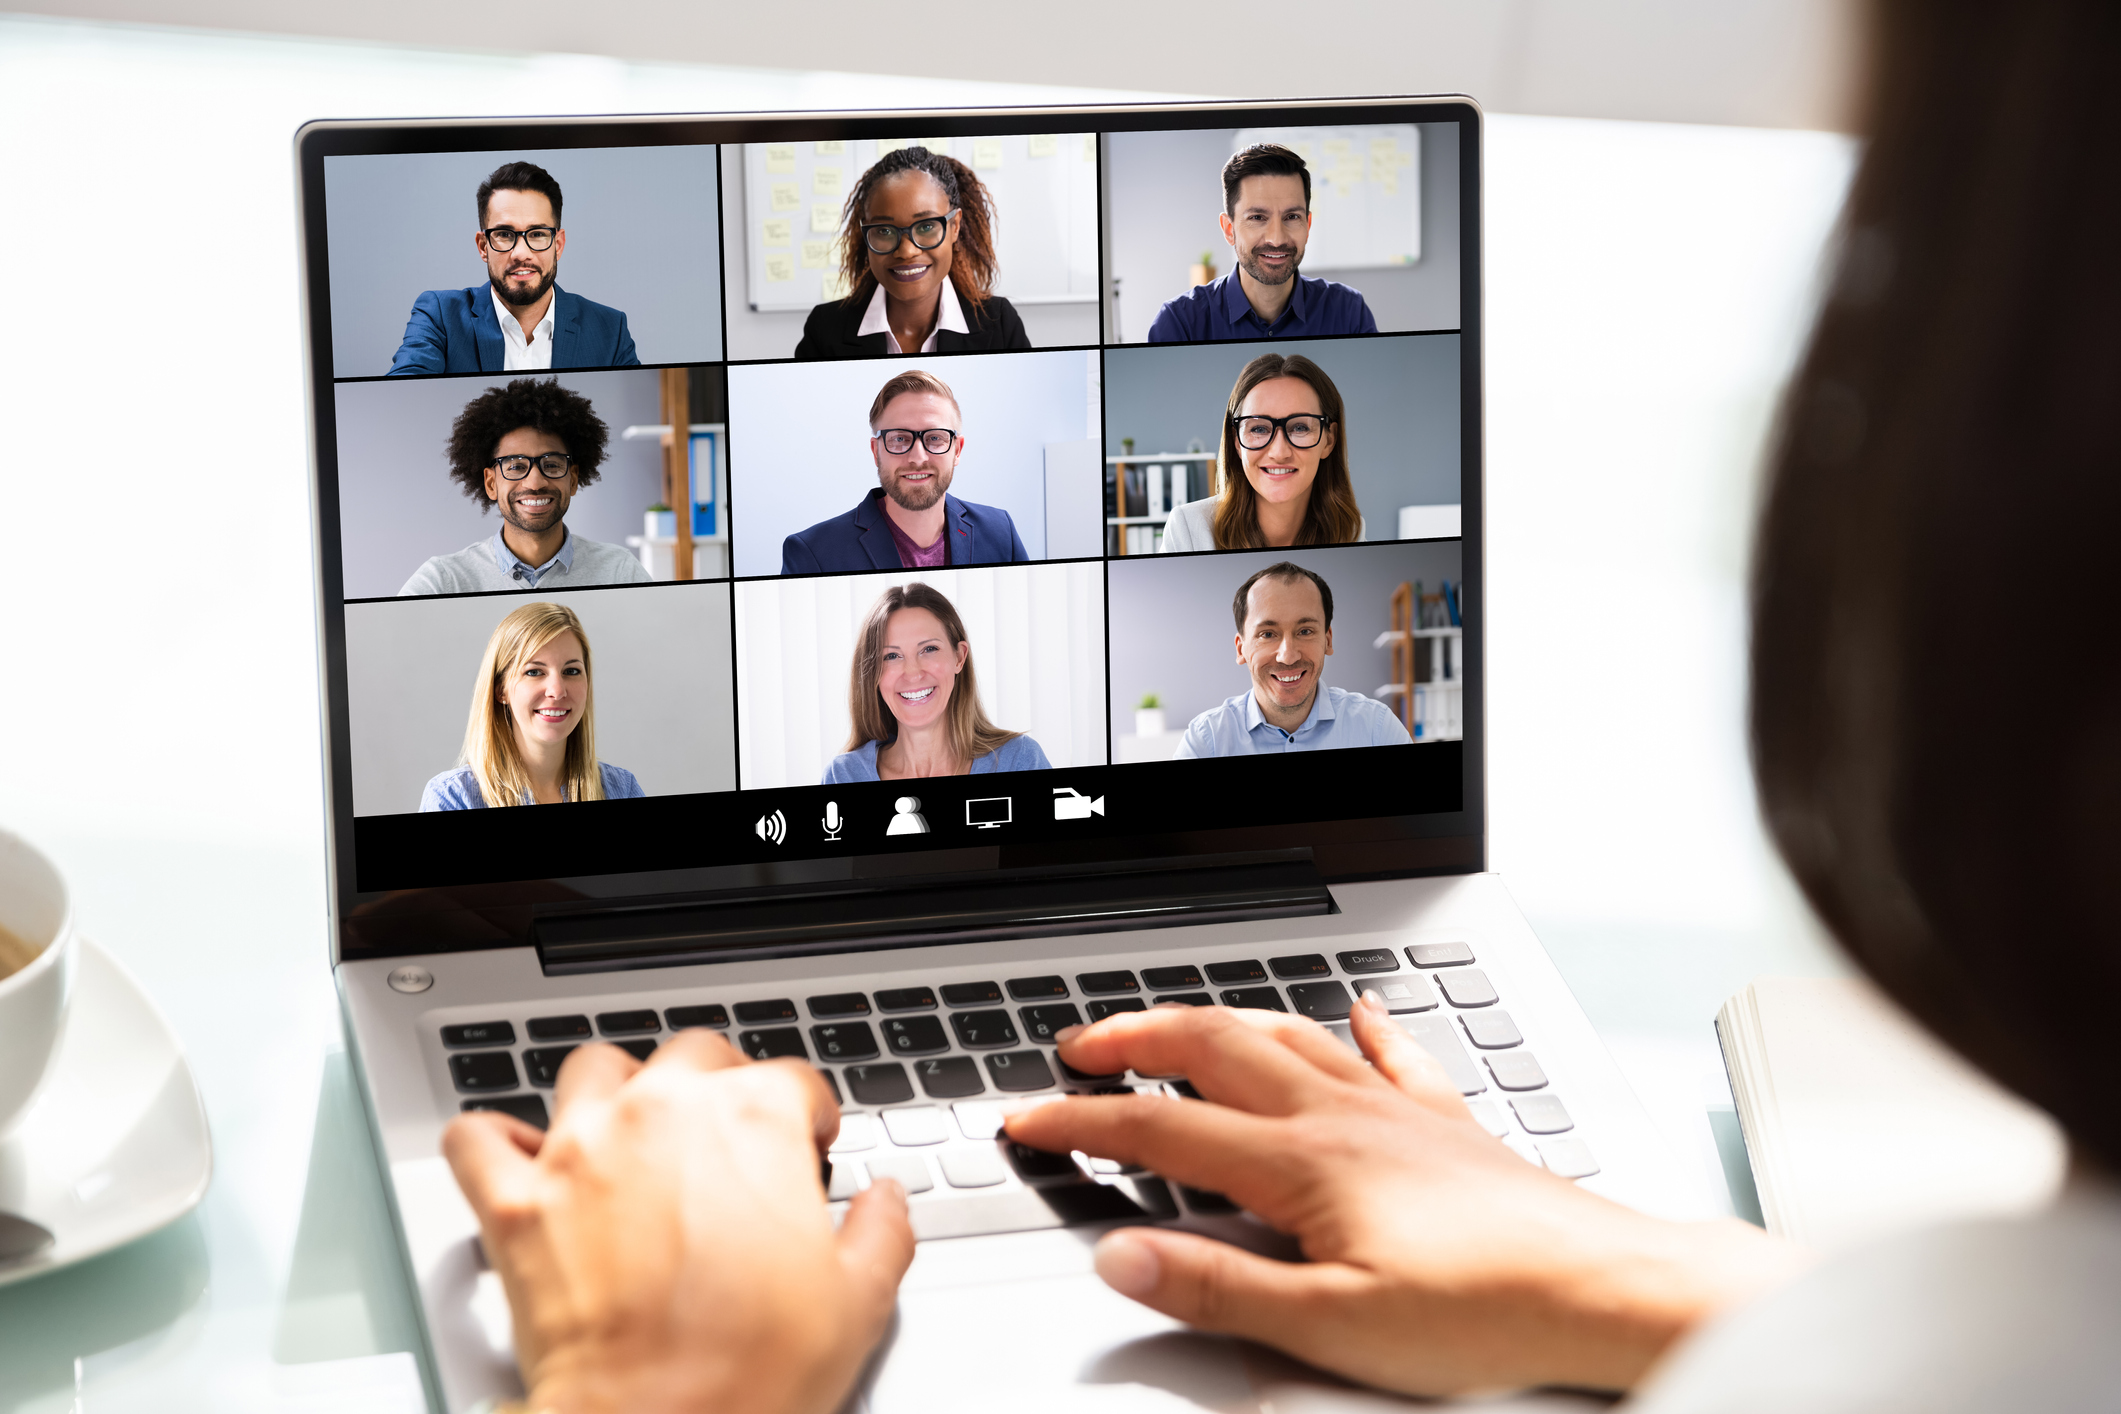 Tips on Effective Video Meetings